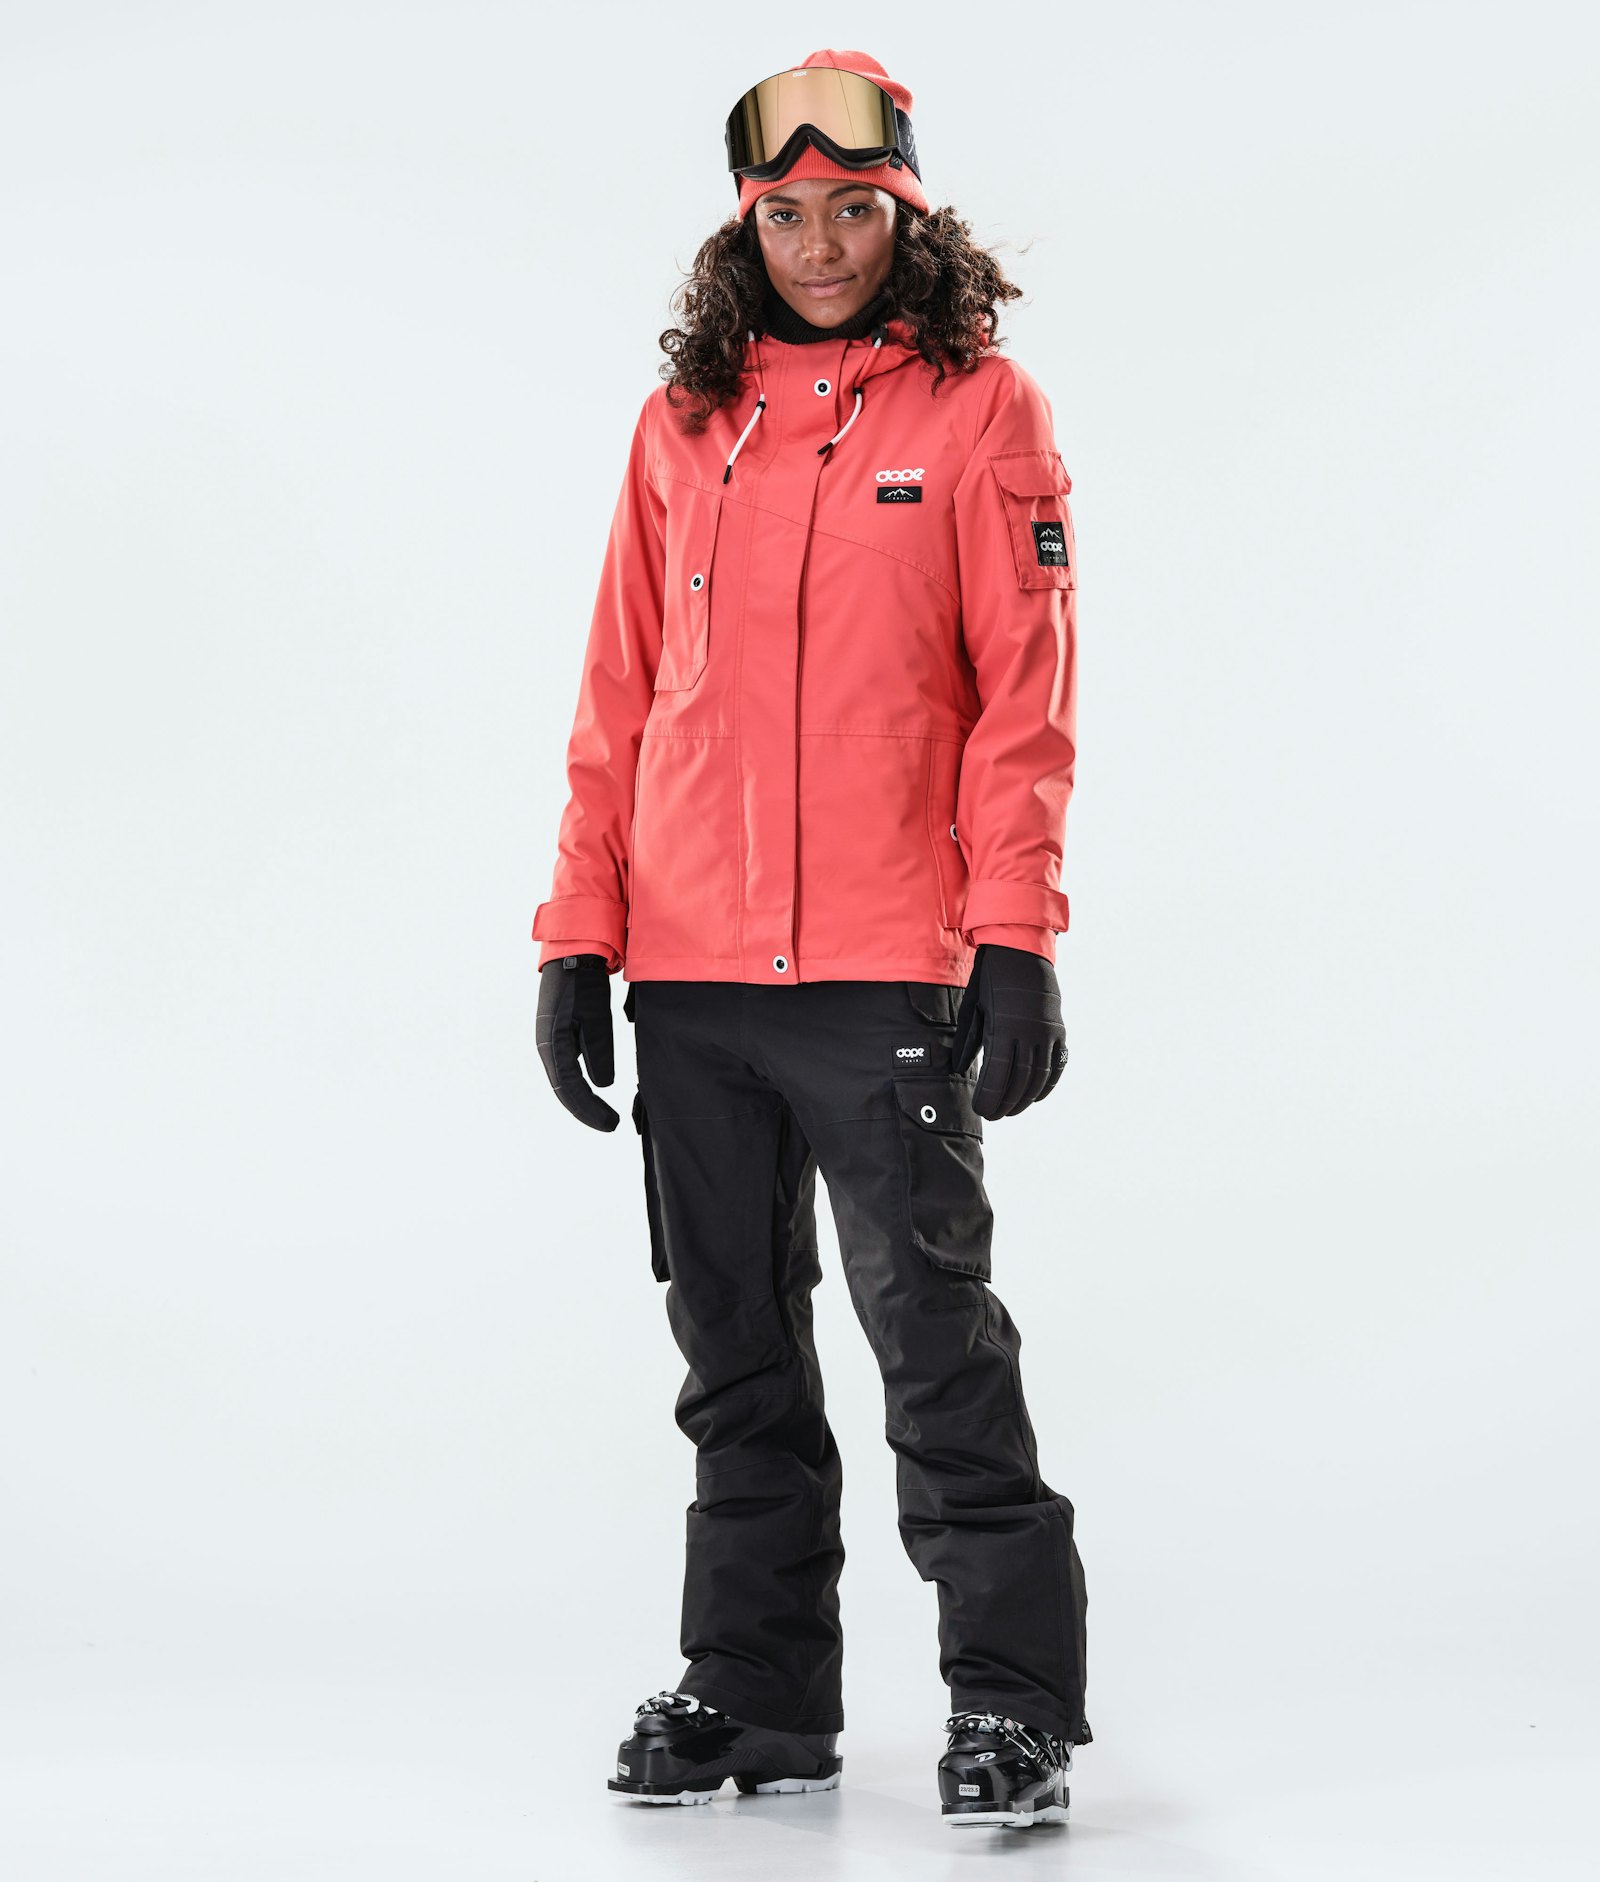 Adept W 2020 Ski Jacket Women Coral